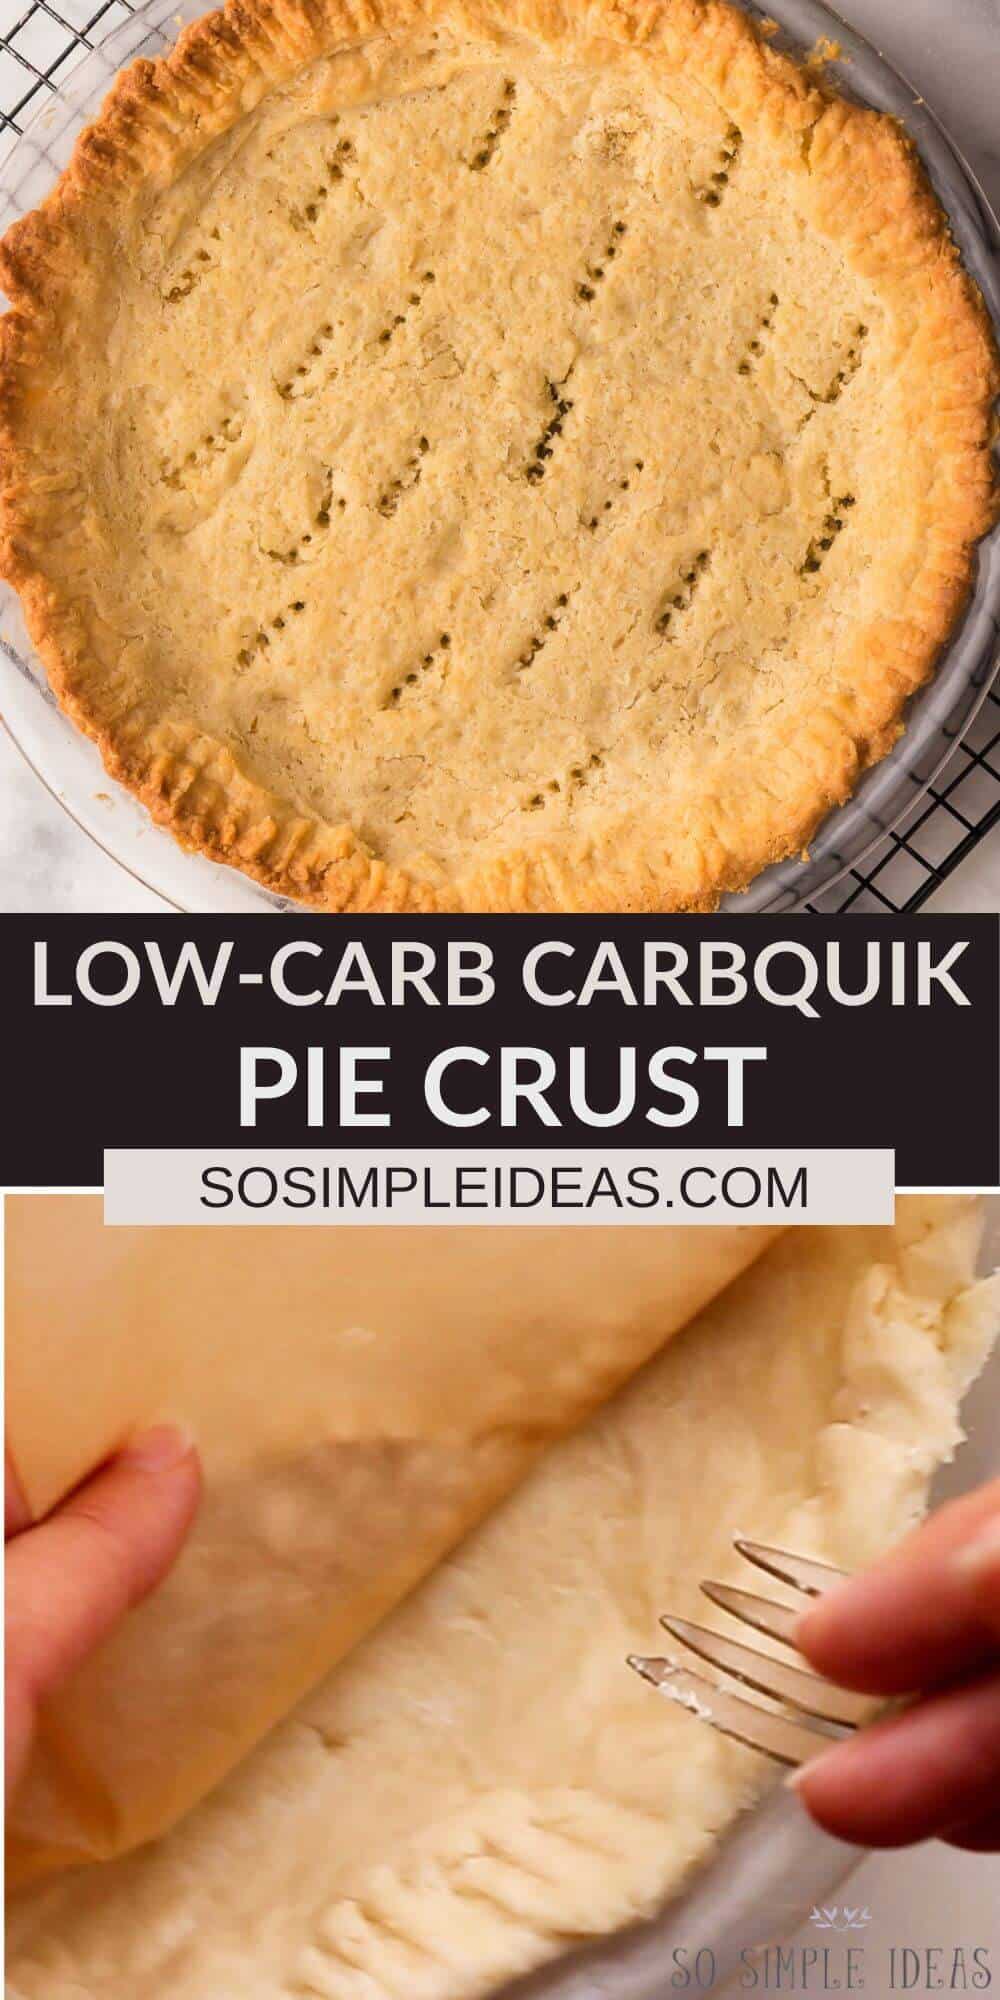 low carb carbquik pie crust pinterest image.